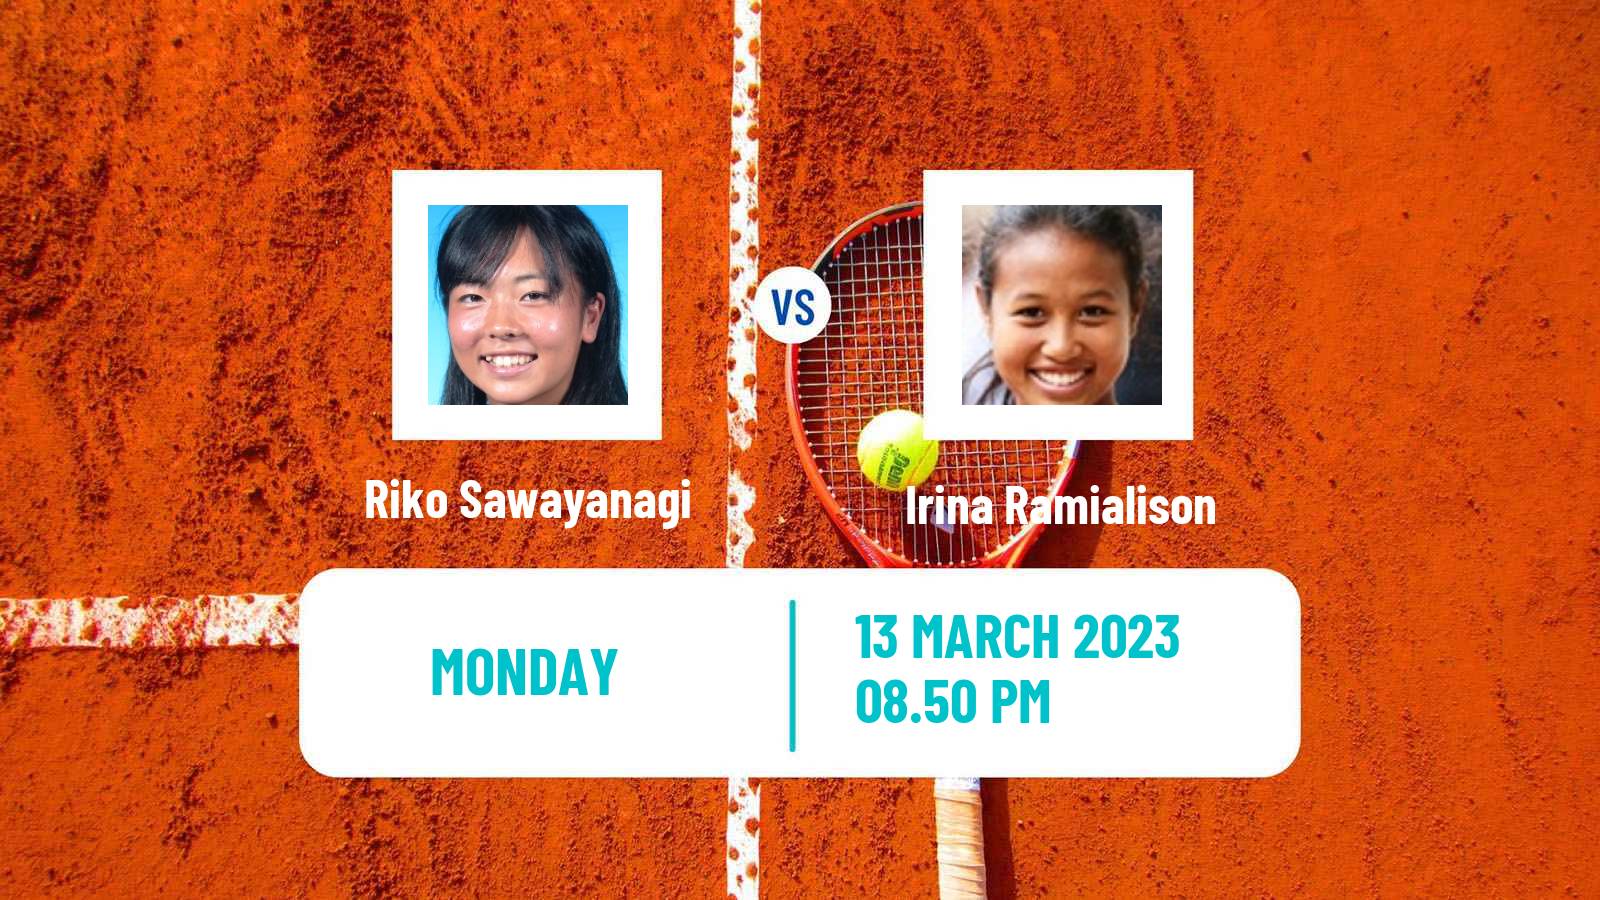 Tennis ITF Tournaments Riko Sawayanagi - Irina Ramialison